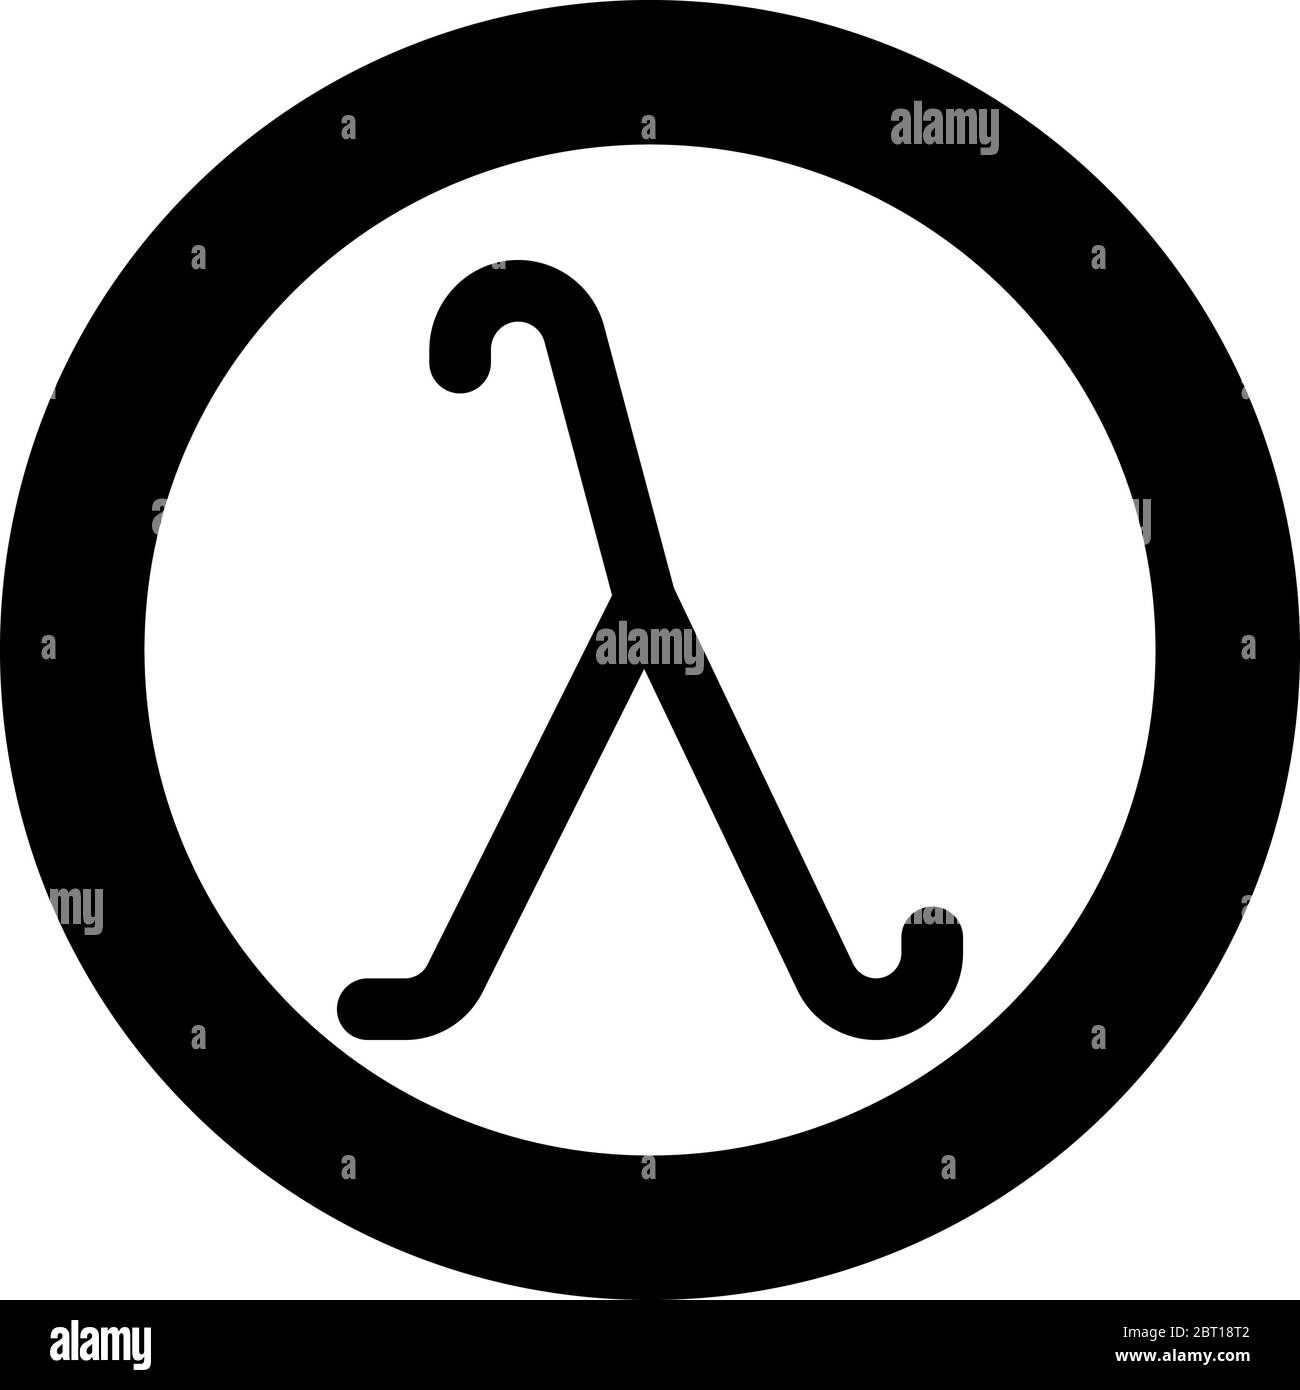 Lambda symbol hi-res stock photography and images - Alamy